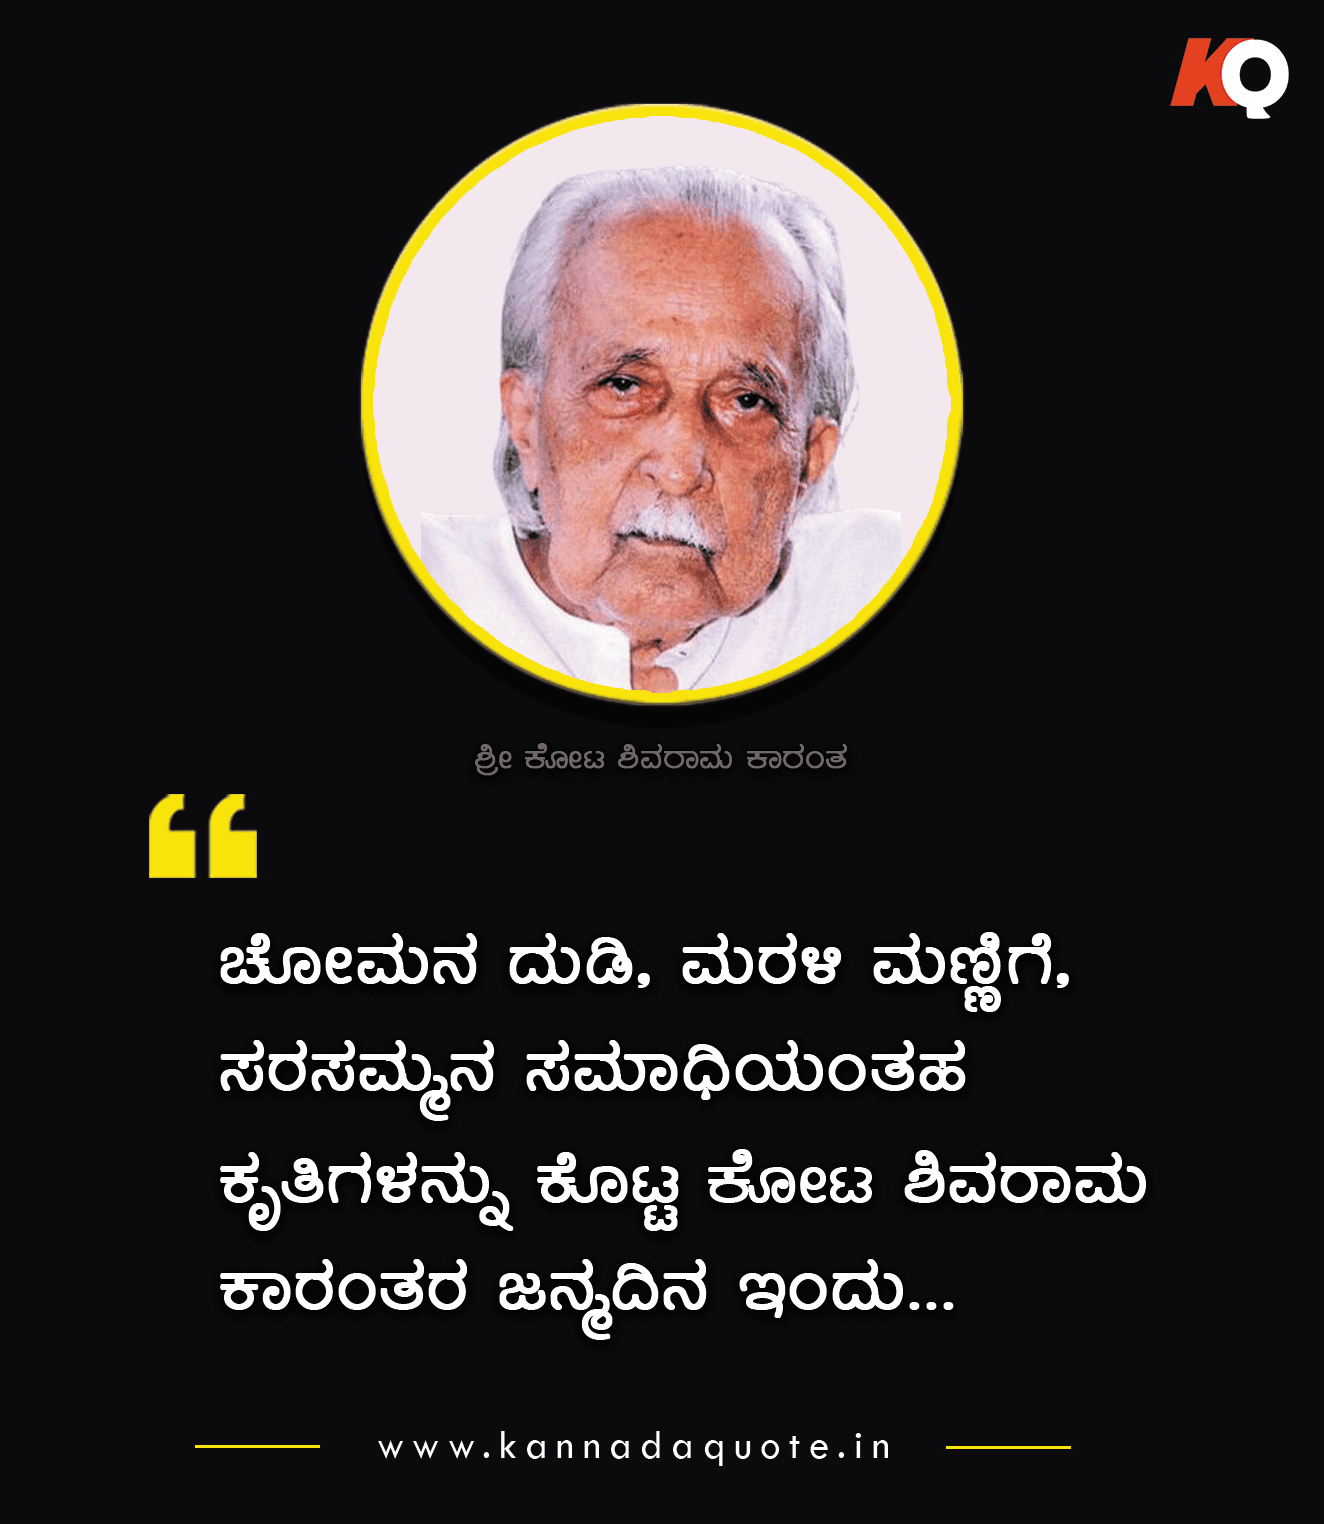 Kota Shivaram Karanth wishes quotes text in Kannada